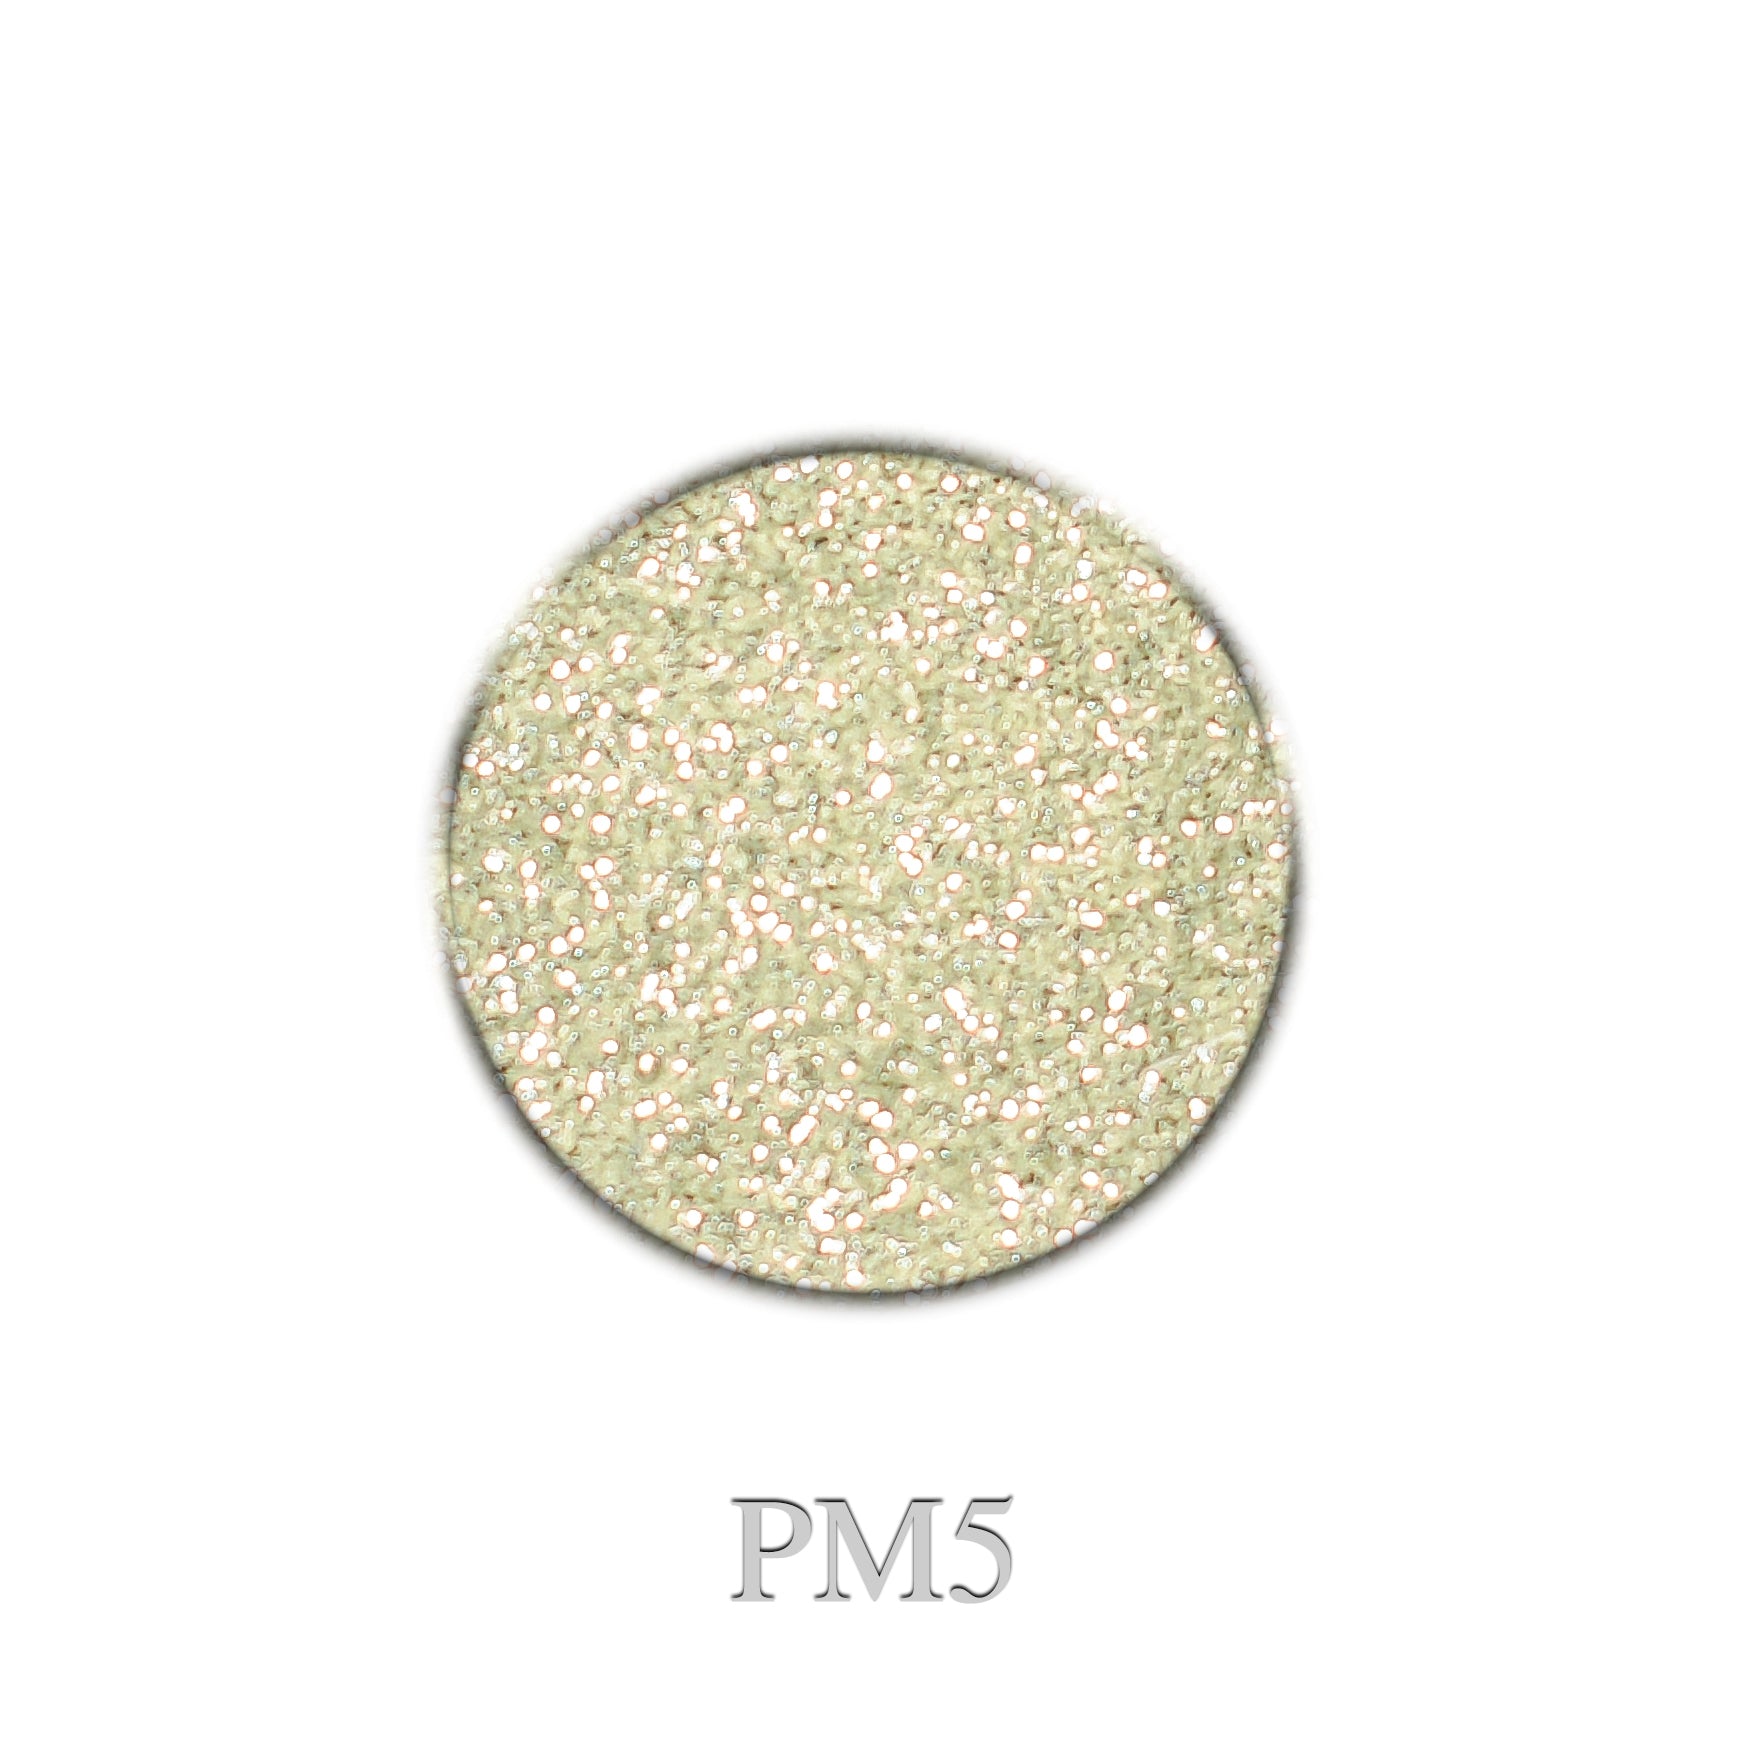 Precious Metal Glitter PM5